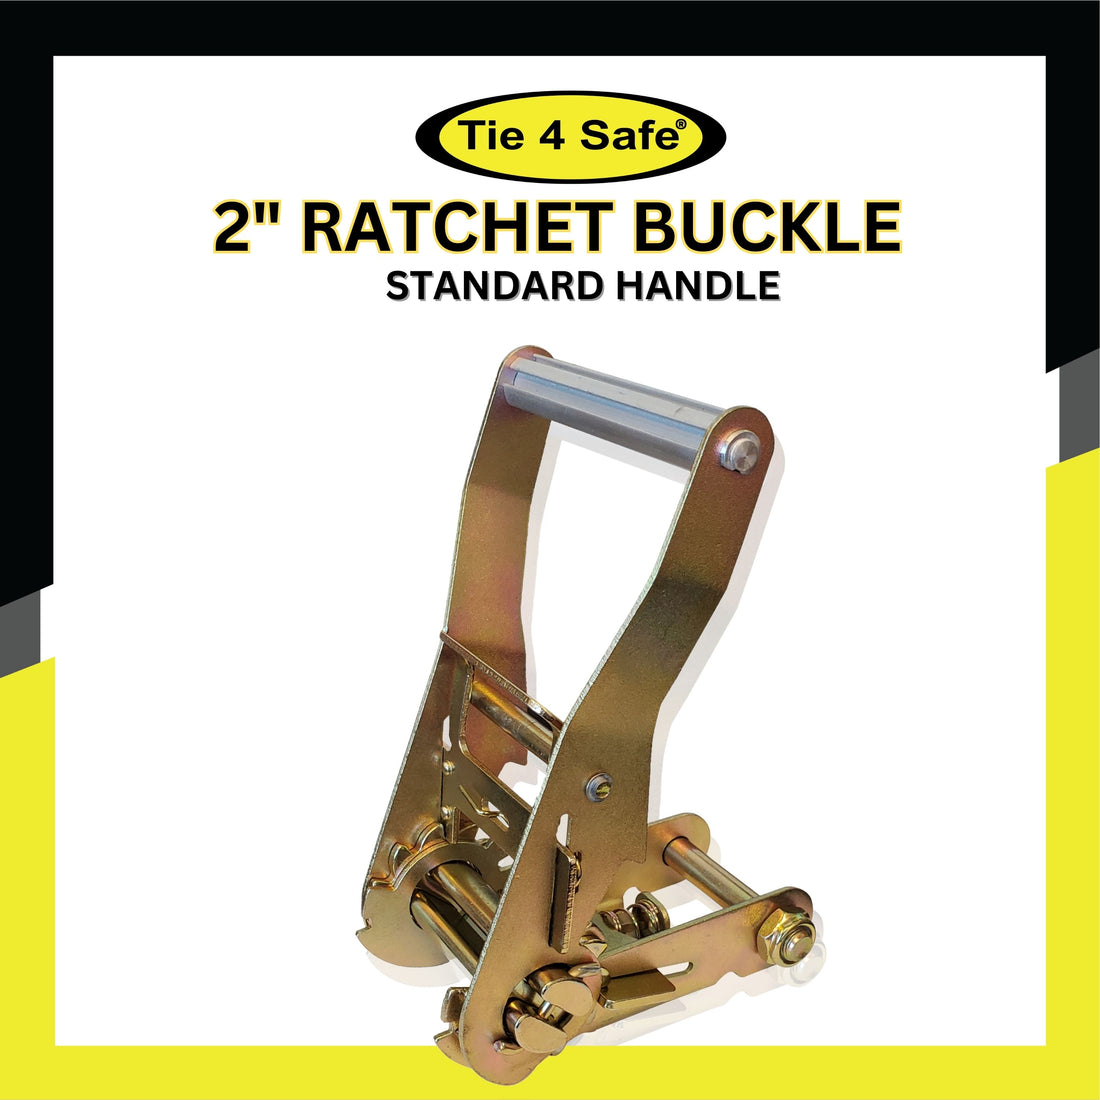 2" Ratchet Buckle